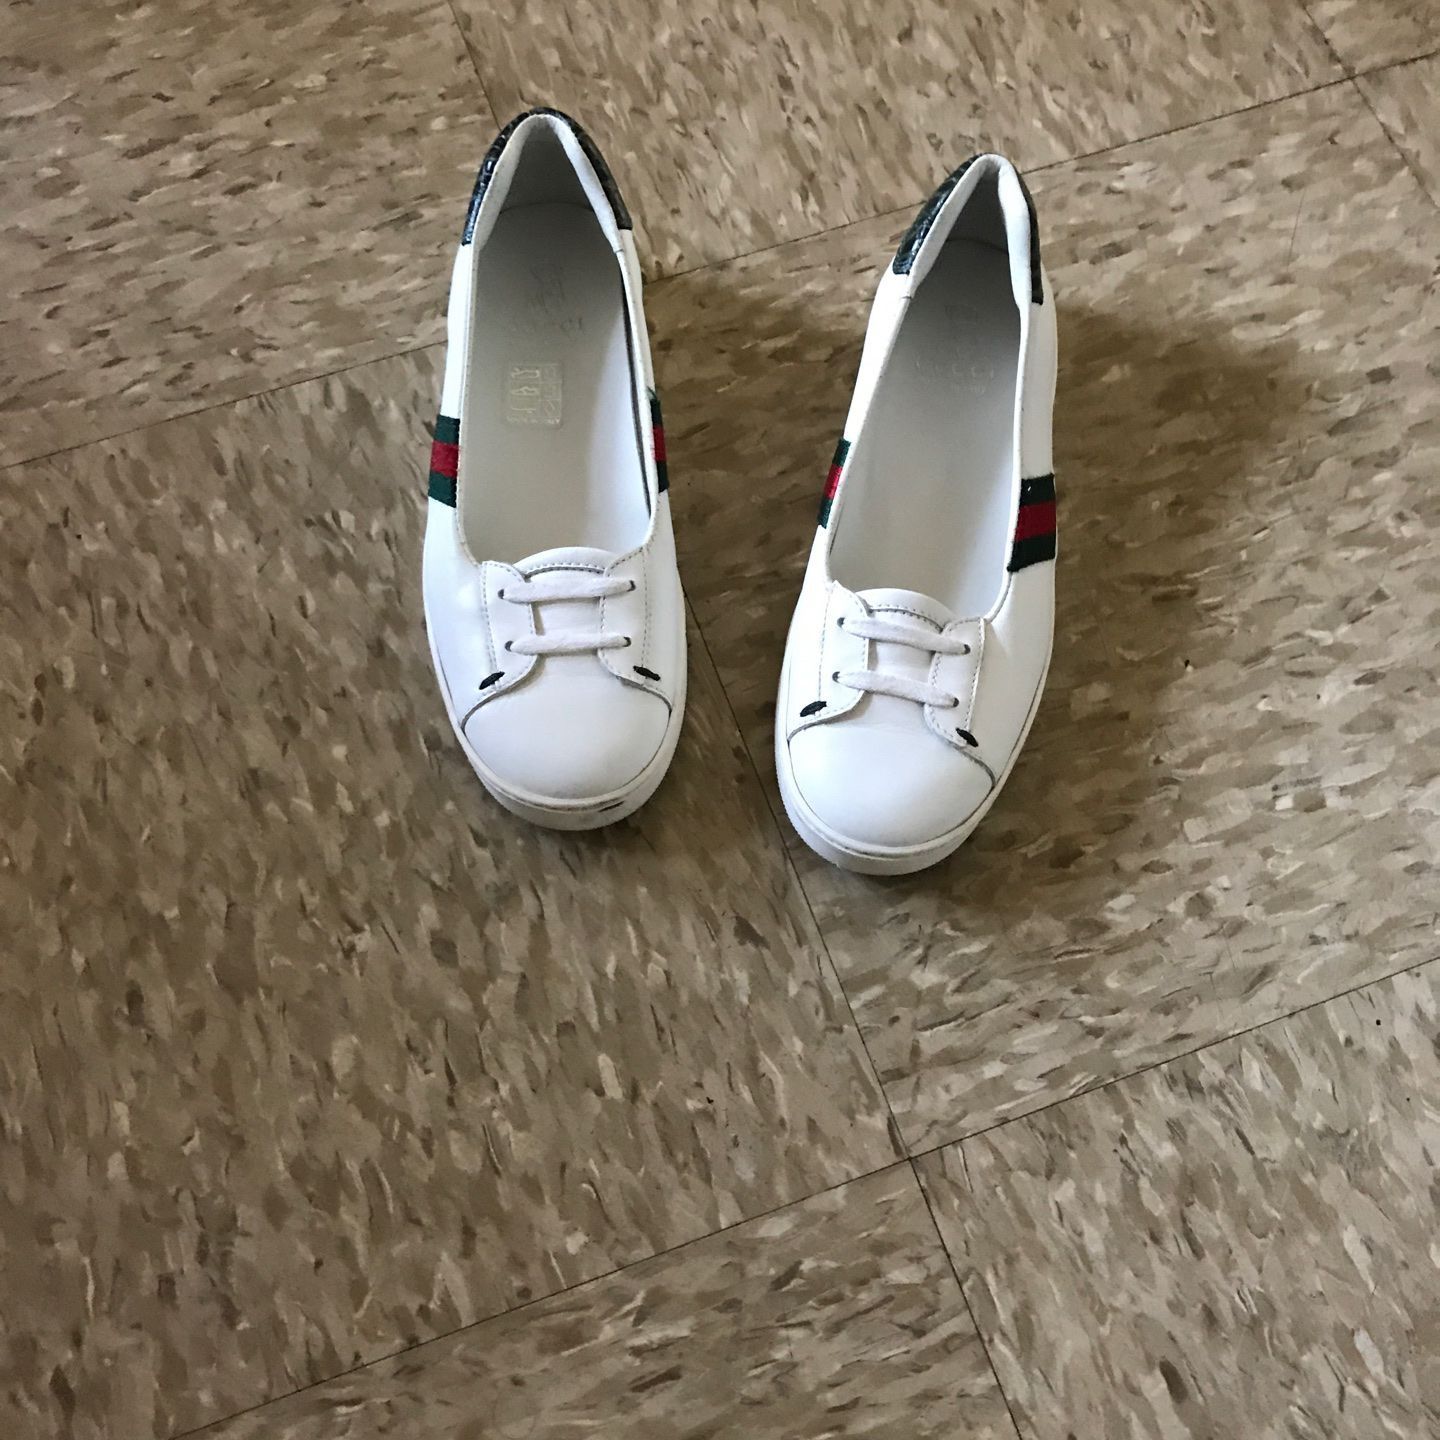 Gucci shoes size 3